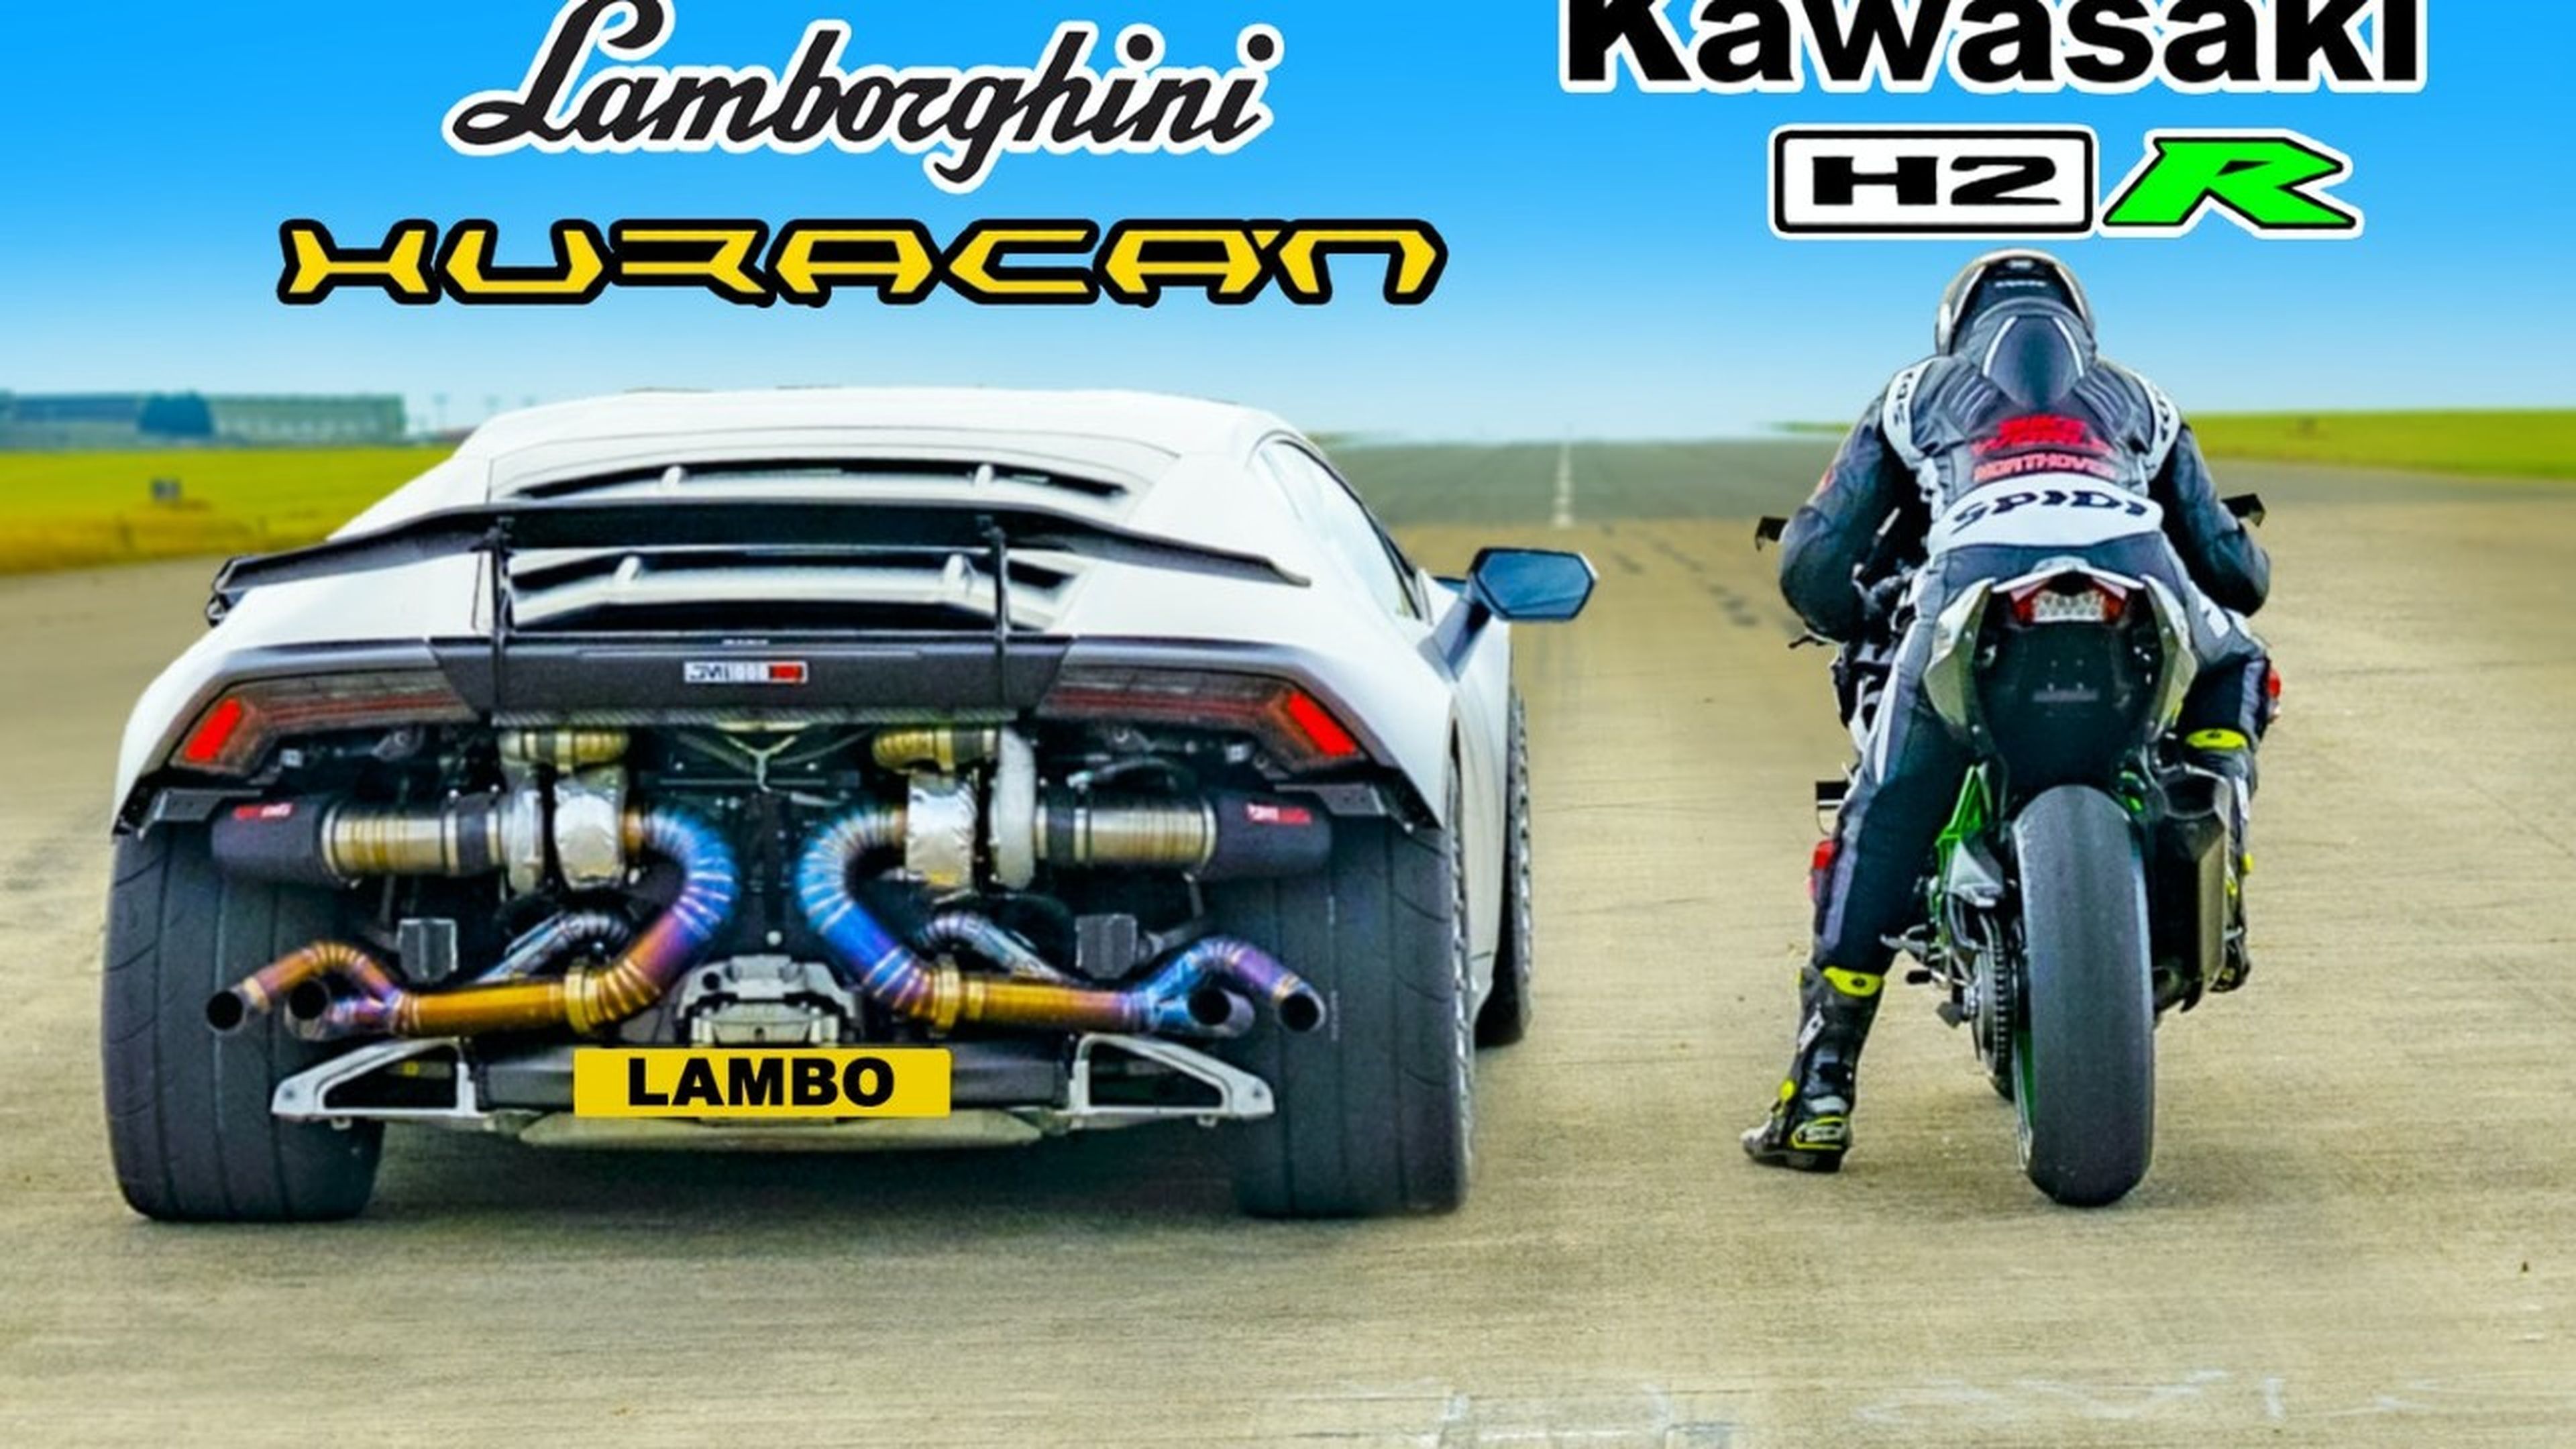 Lamborghini Huracan Turbo contra Kawasaki H2R